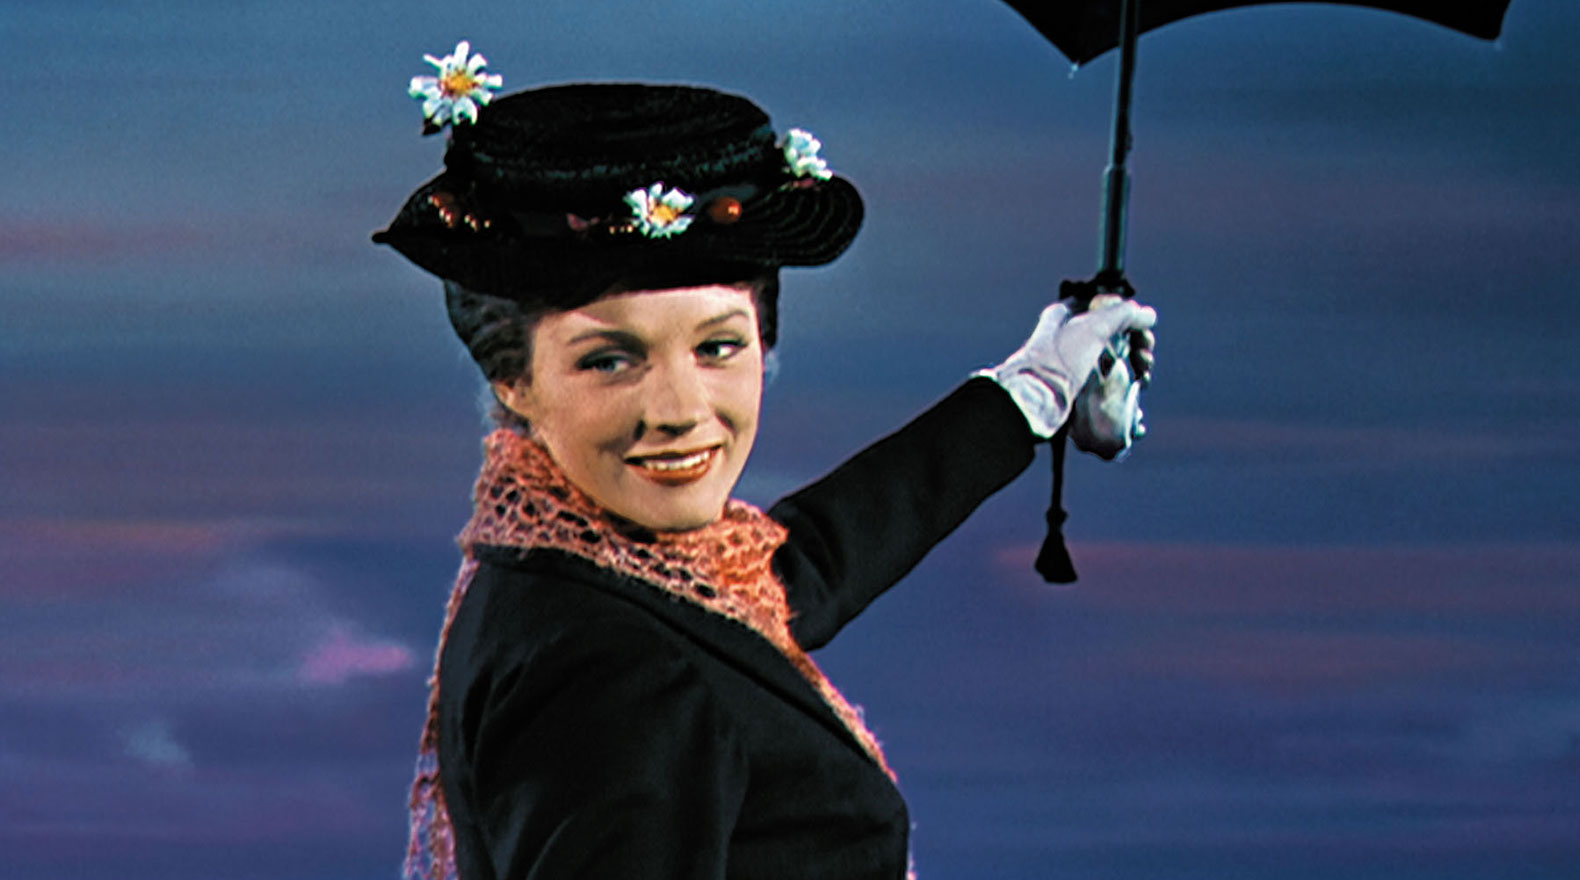 devotudoaocinema.com.br - O encanto do eterno clássico "Mary Poppins", de Robert Stevenson